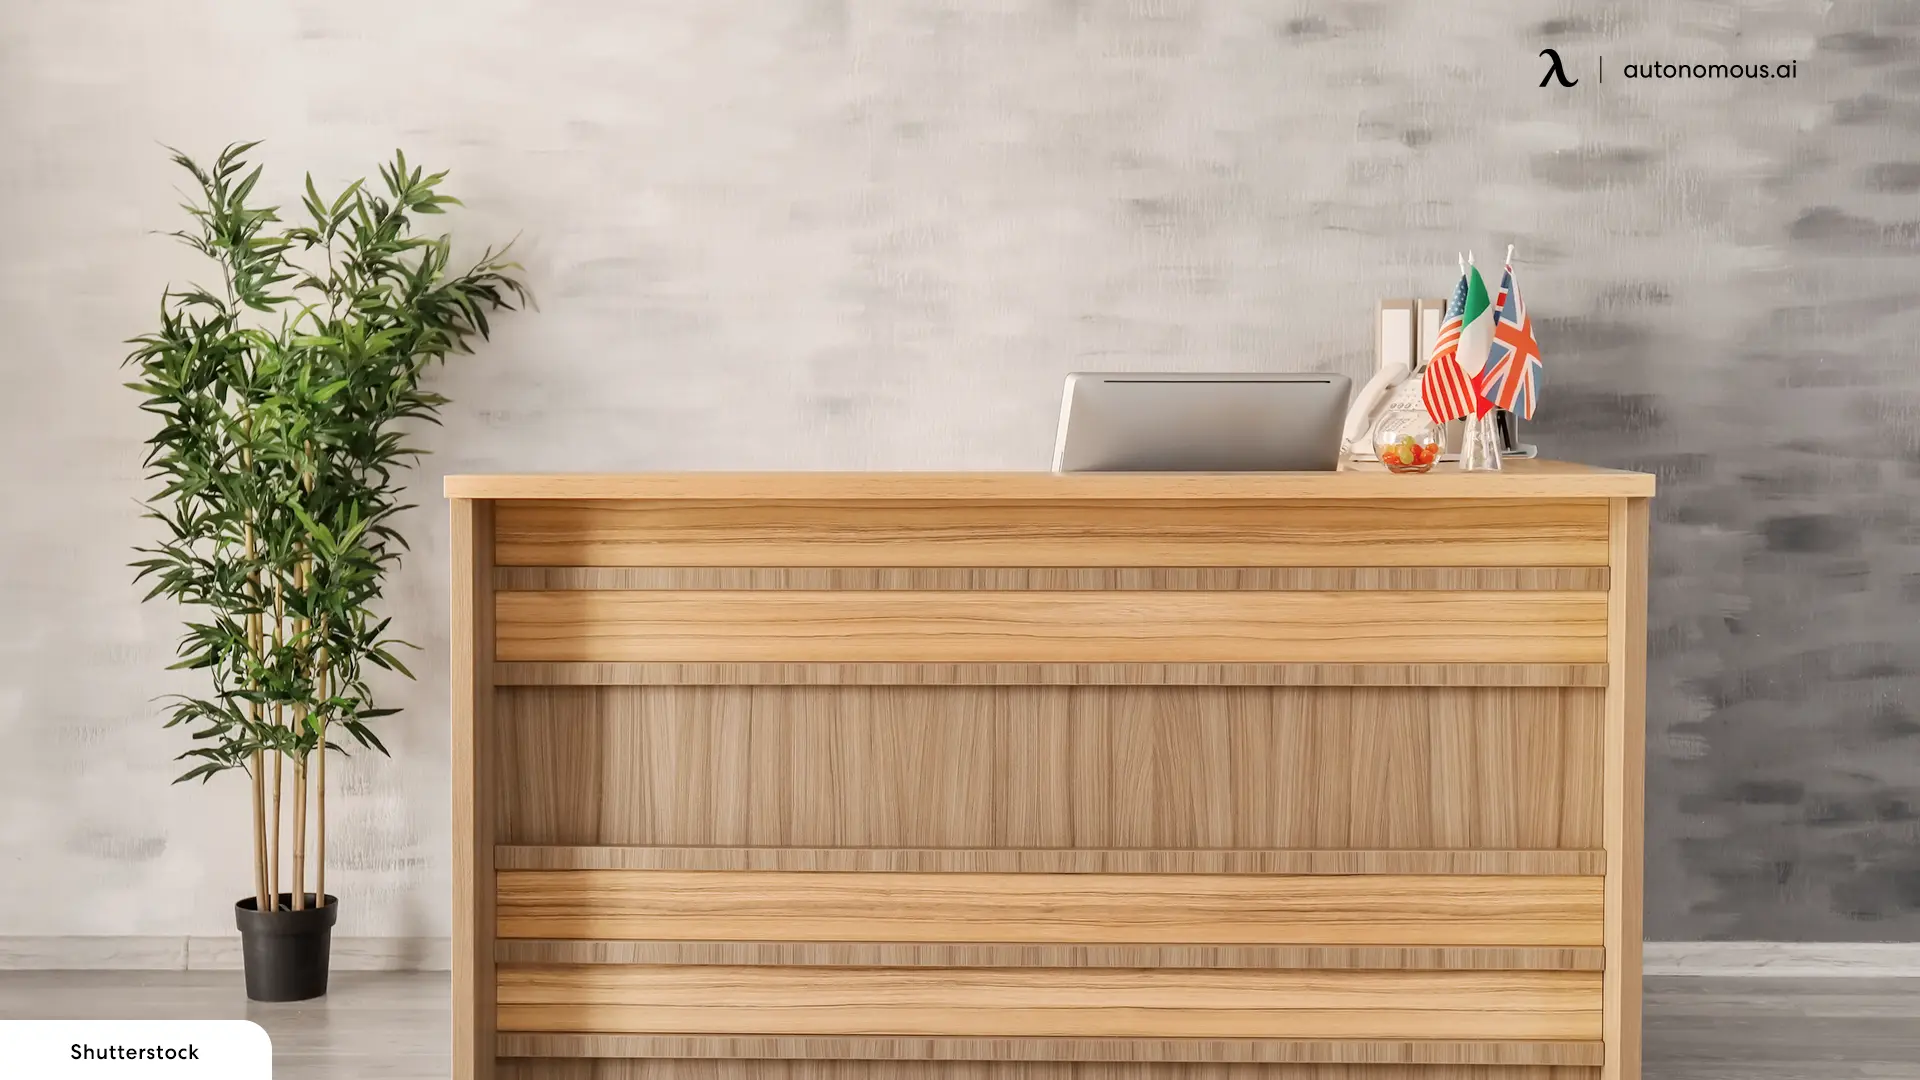 DIY Reception Desk Using Plywood